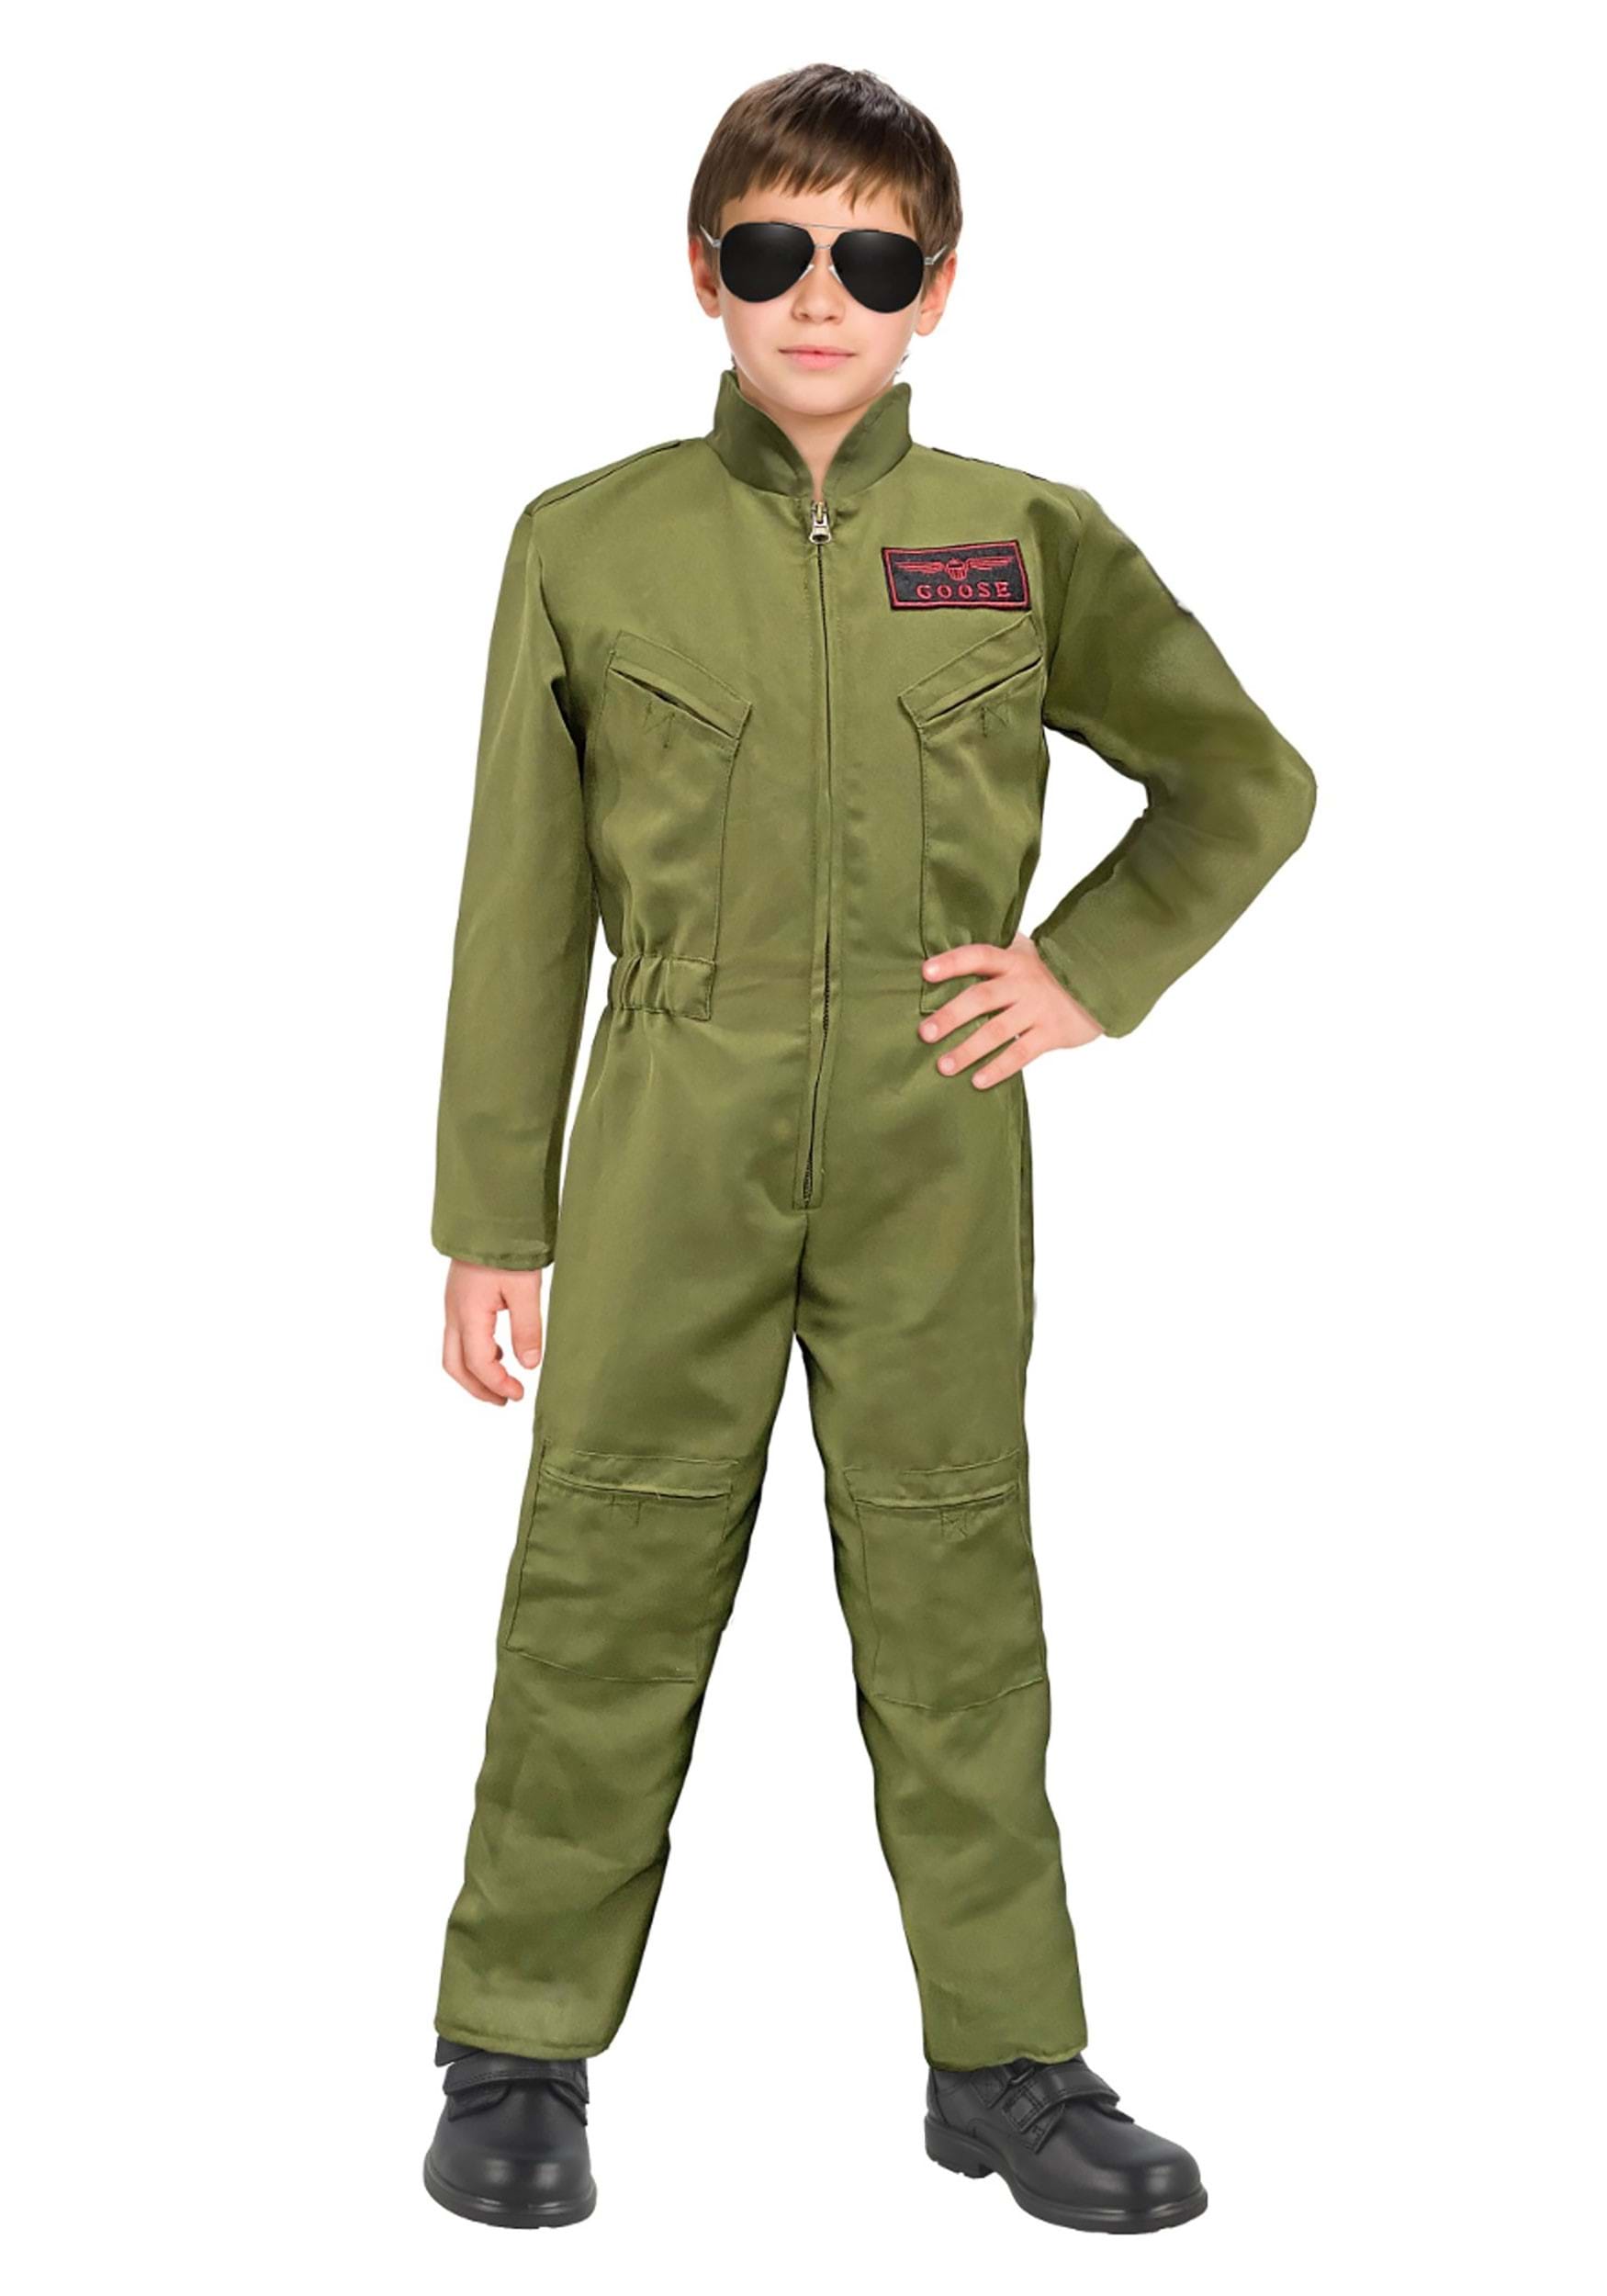 Kid's Green Fighter Pilot Jumpsuit Costume , Pilot Costumes